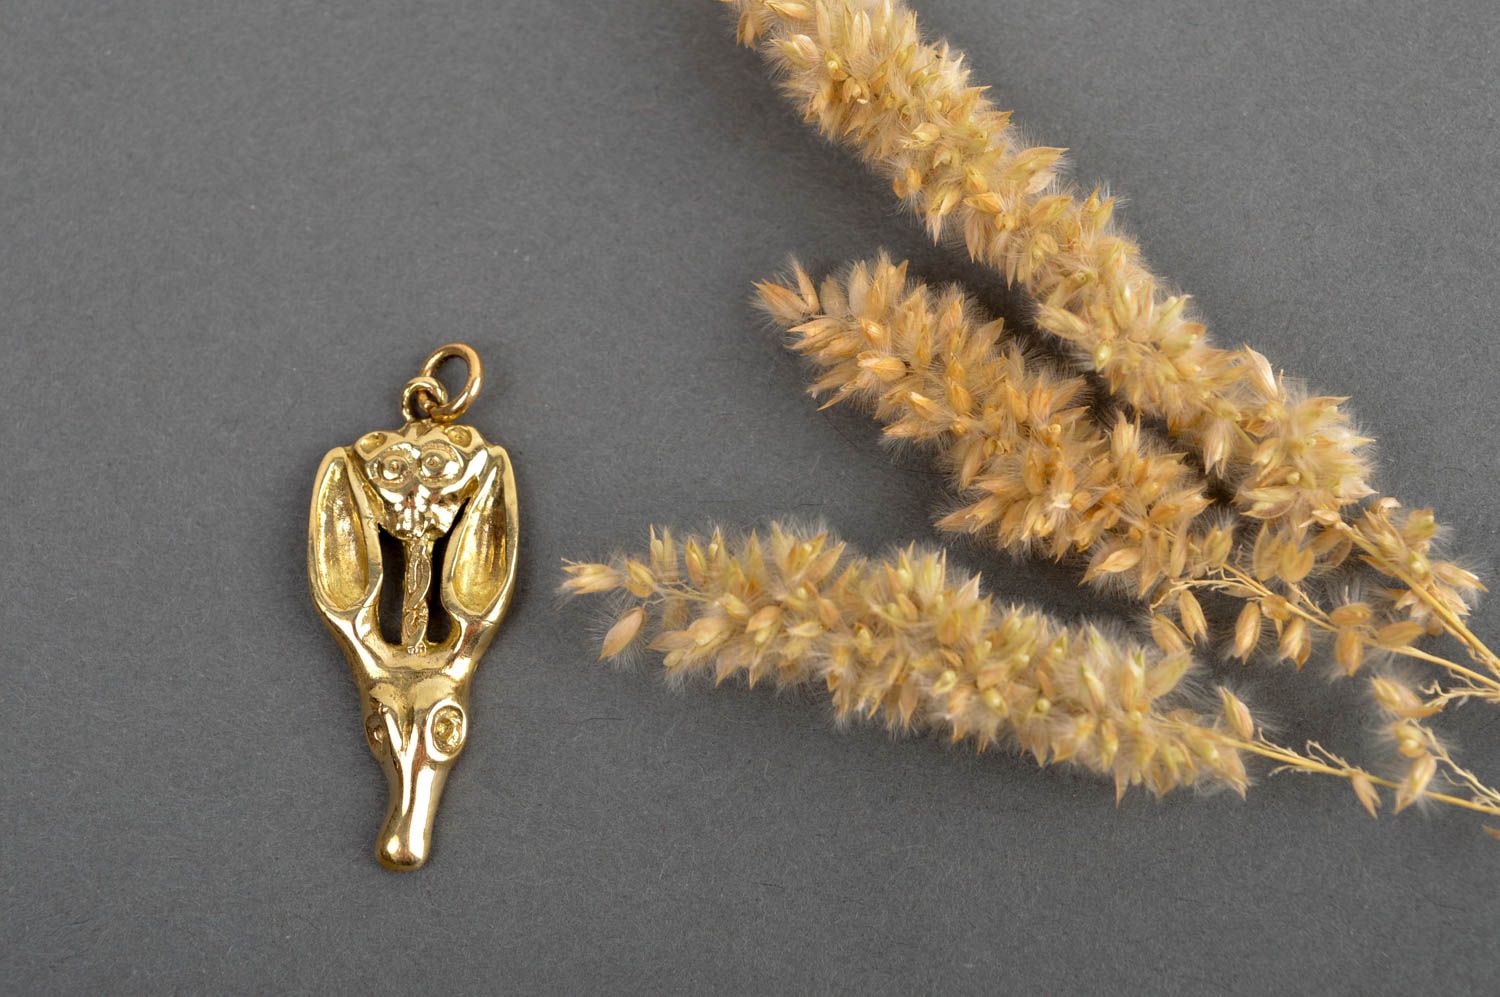 Handmade metal jewelry unusual neck pendant stylish brass pendant gift photo 1